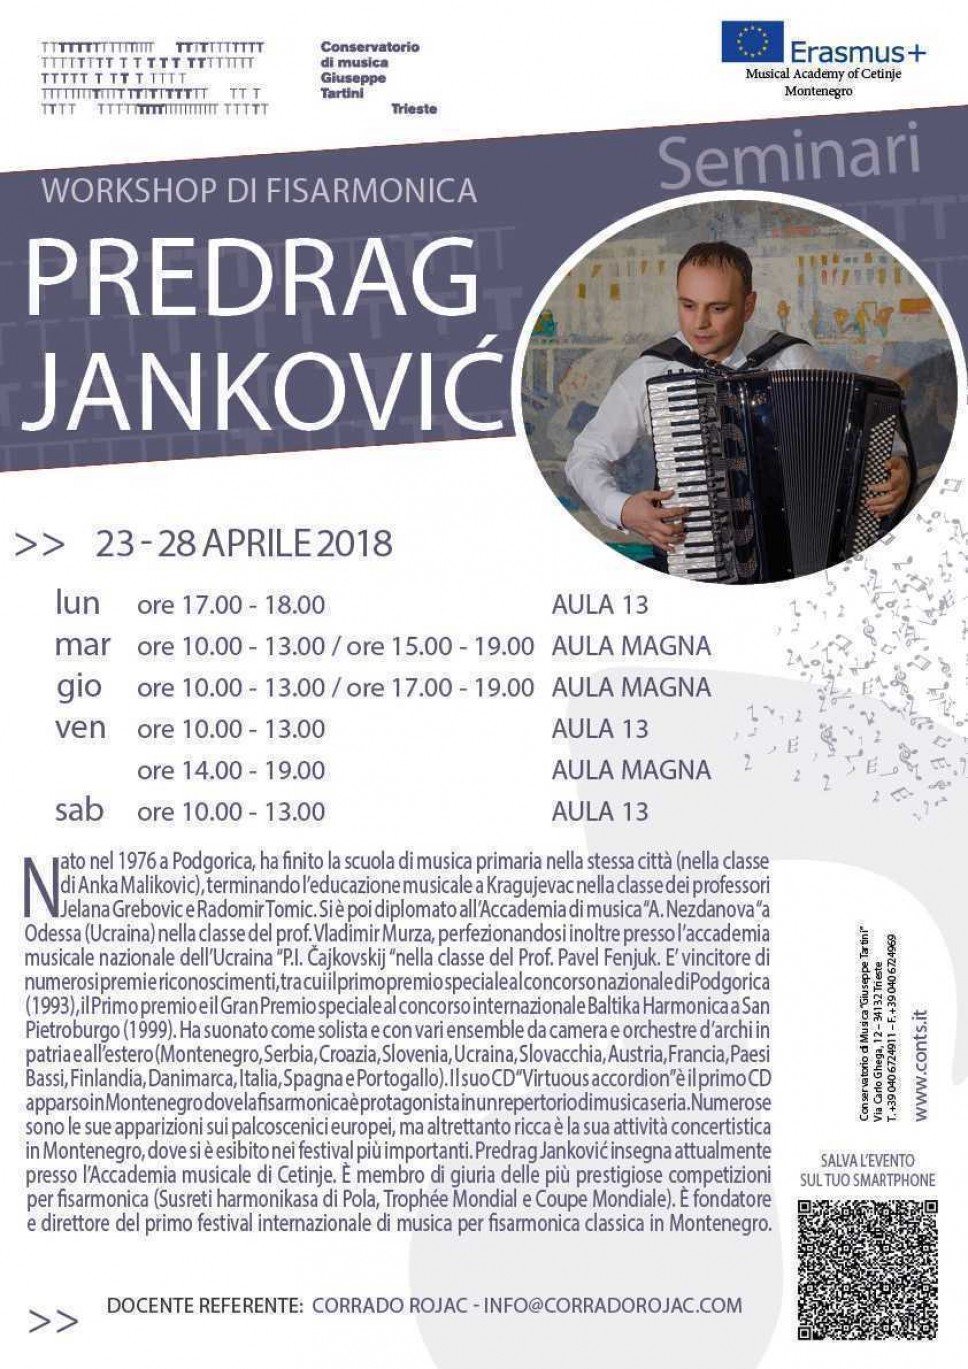 Masterclass prof. Predraga Jankovića na Konzervatorijumu "Đuzepe Tartini" u Trstu